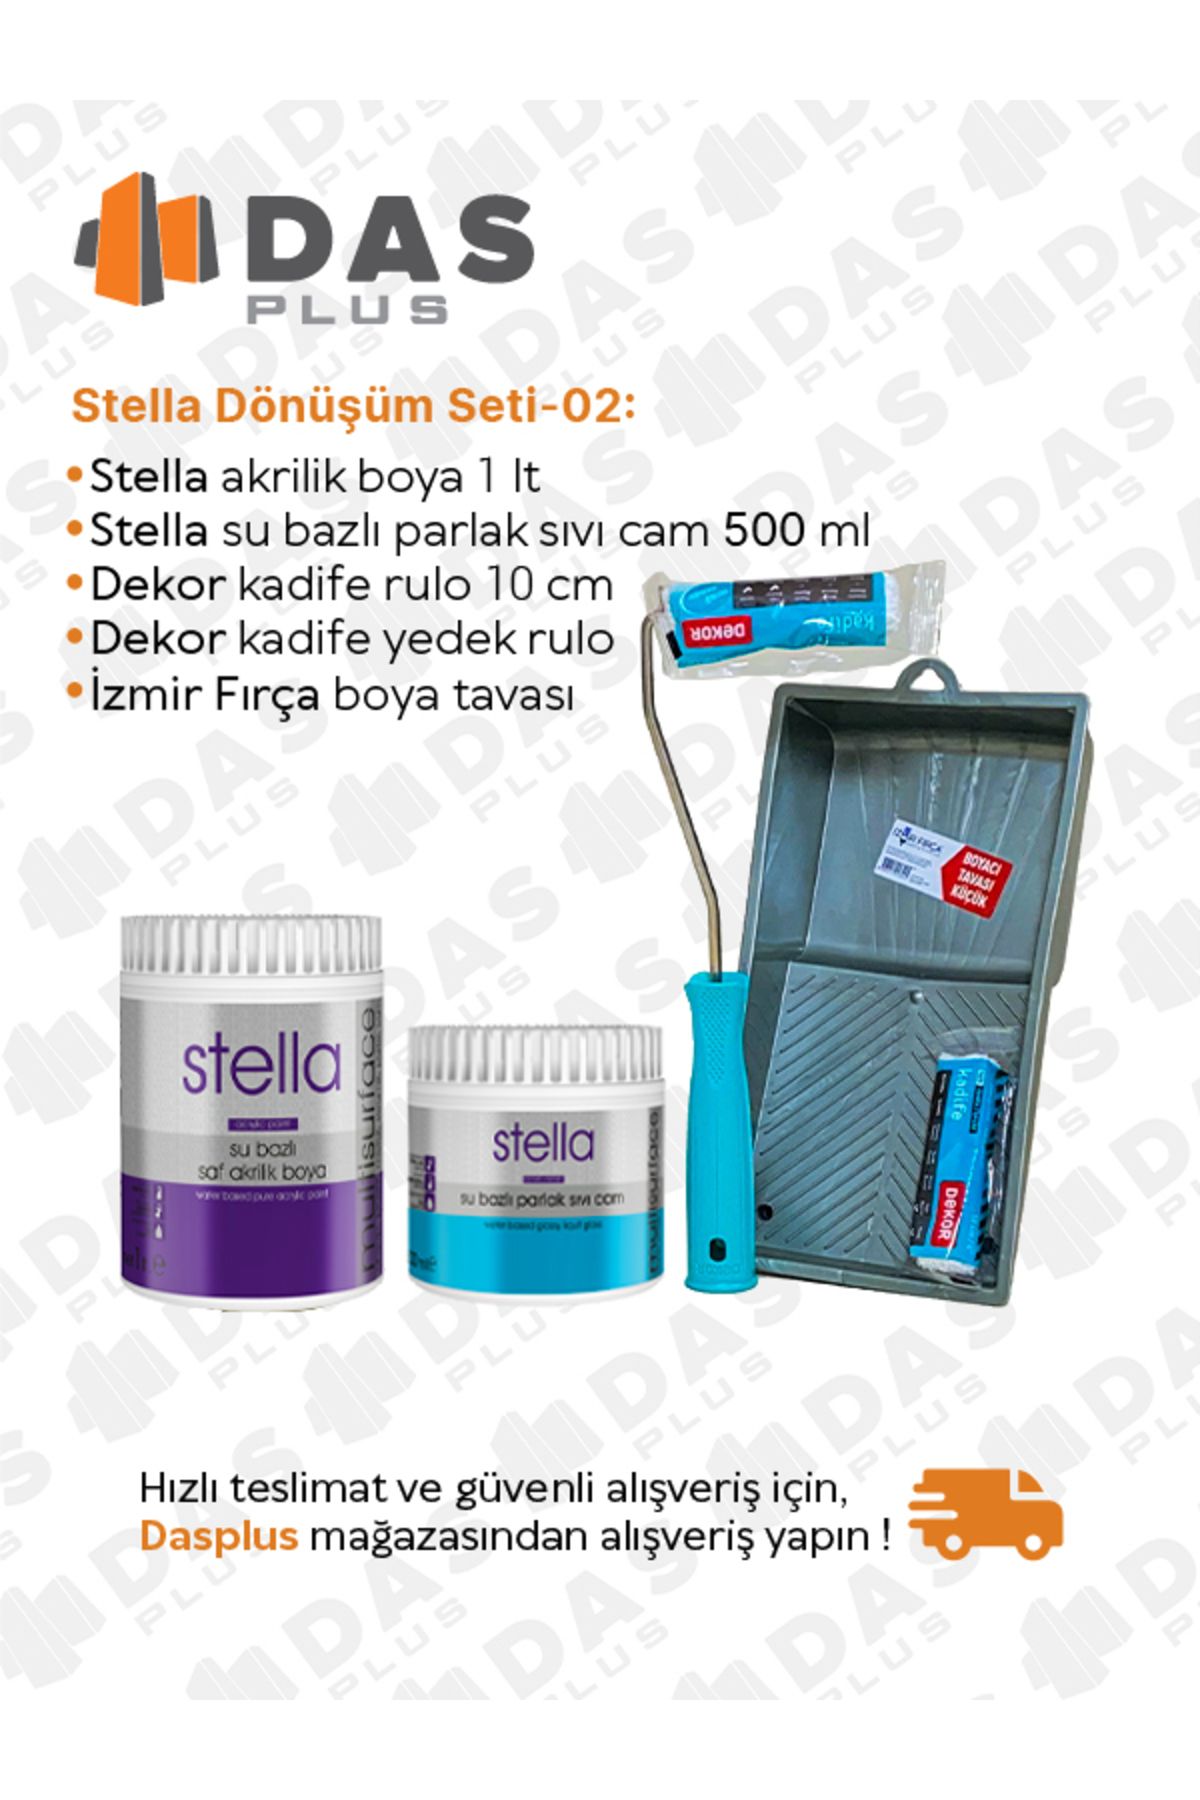 Stella DASPLUS-STELLA SAF AKRİLİK BOYA & PARLAK SIVI CAM & KADİFE RULO HOBİ SET-02